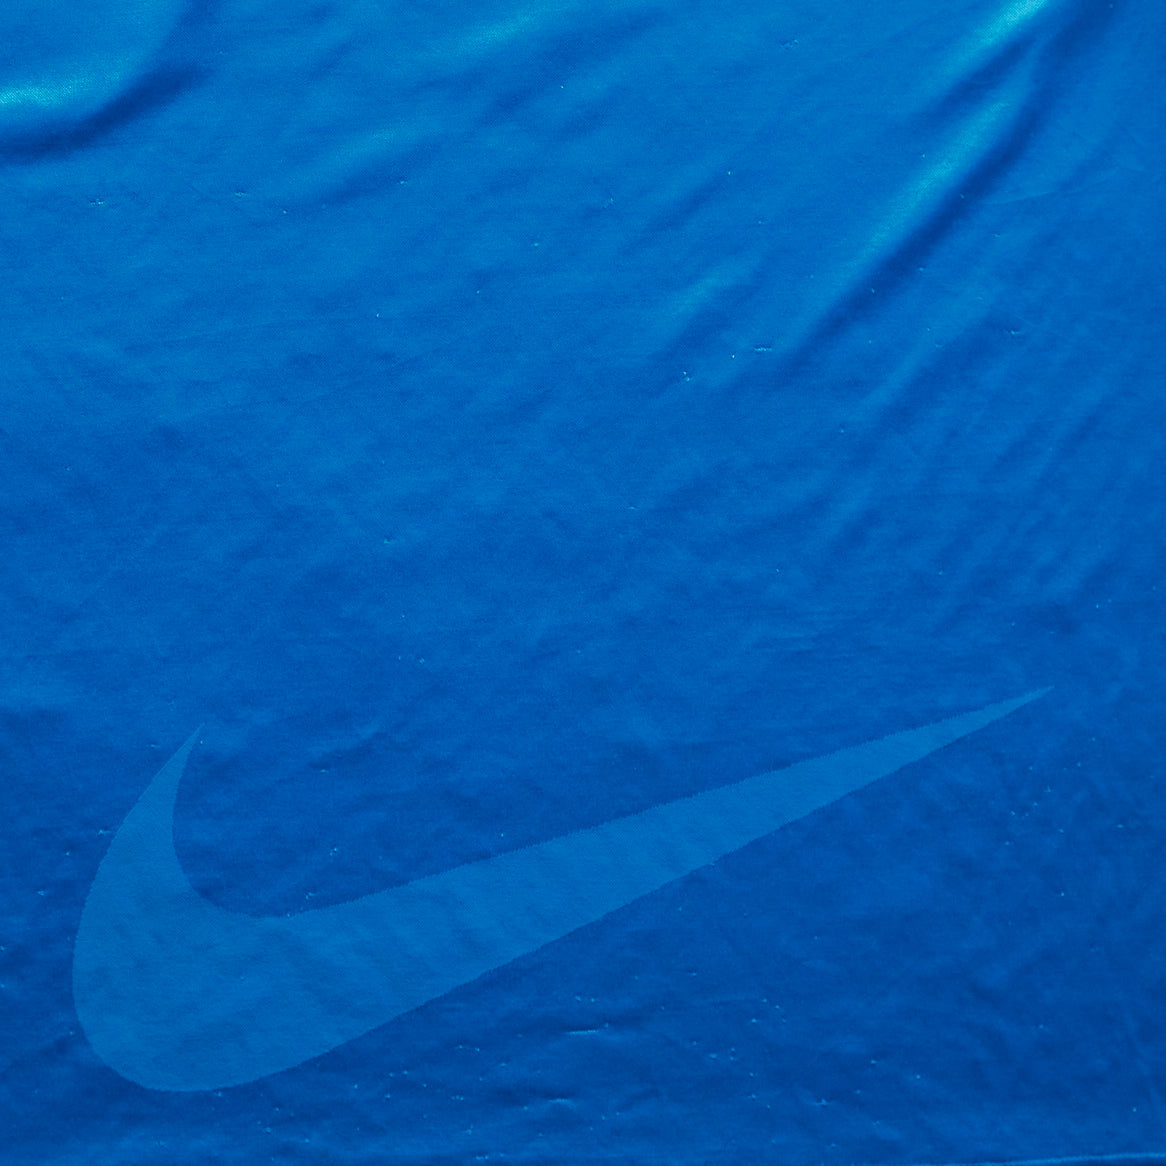 (XL) 90s Nike Jersey